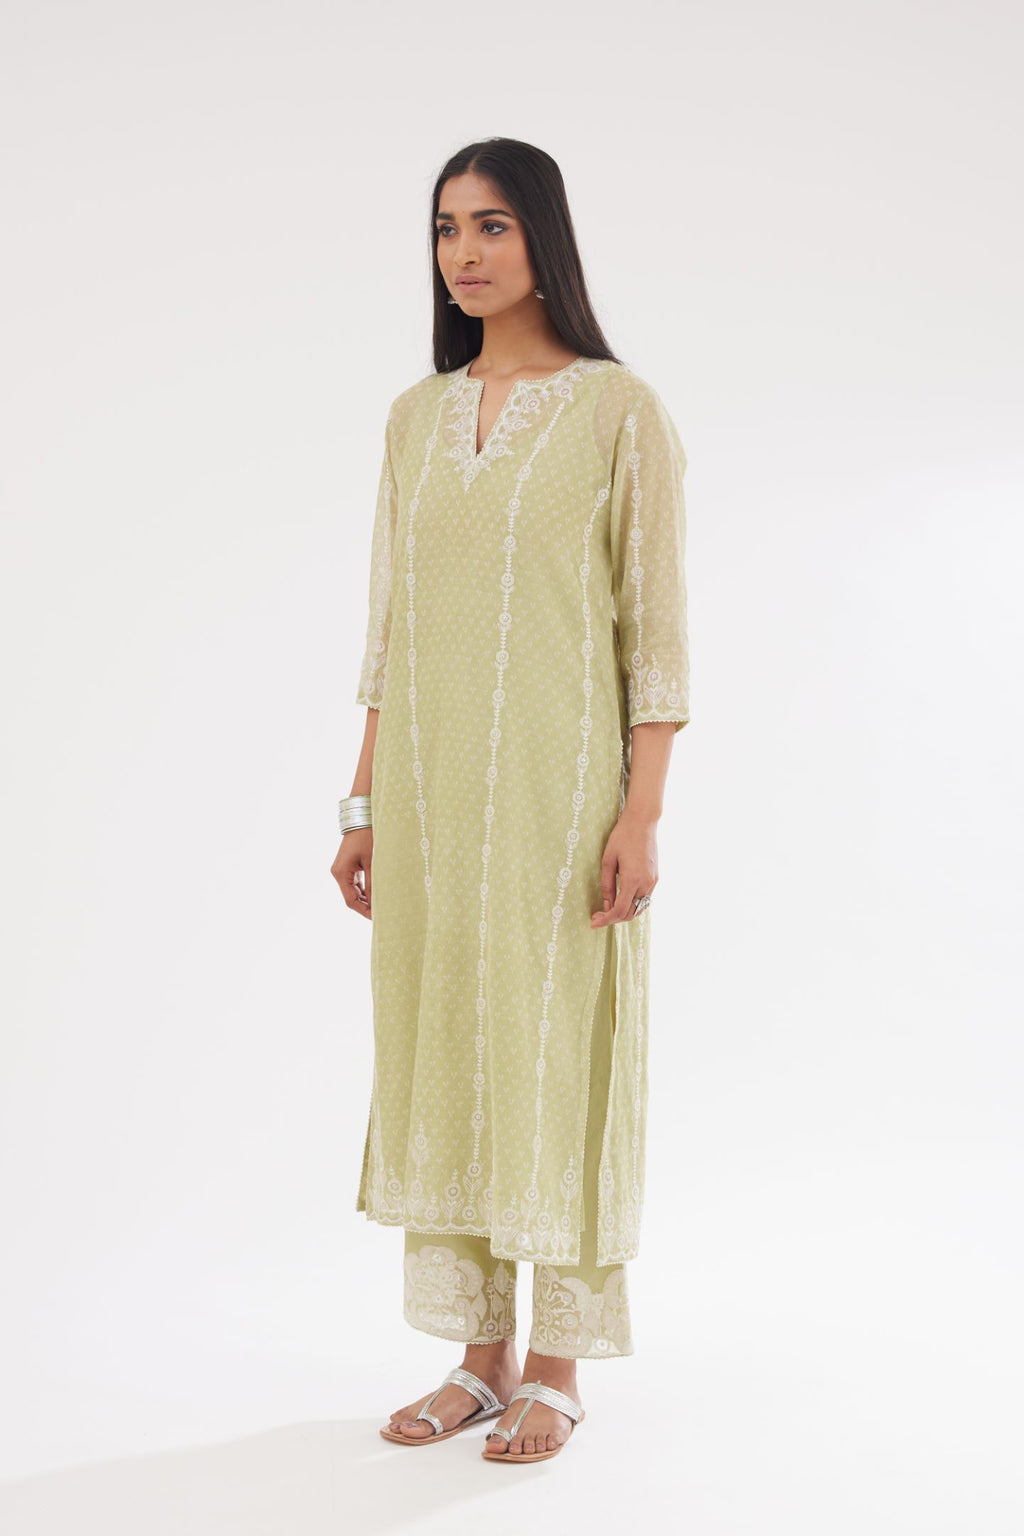 Green cotton chanderi hand block printed kurta set with dori and silk thread chhari - stripes, all over and heavier butas at hem.